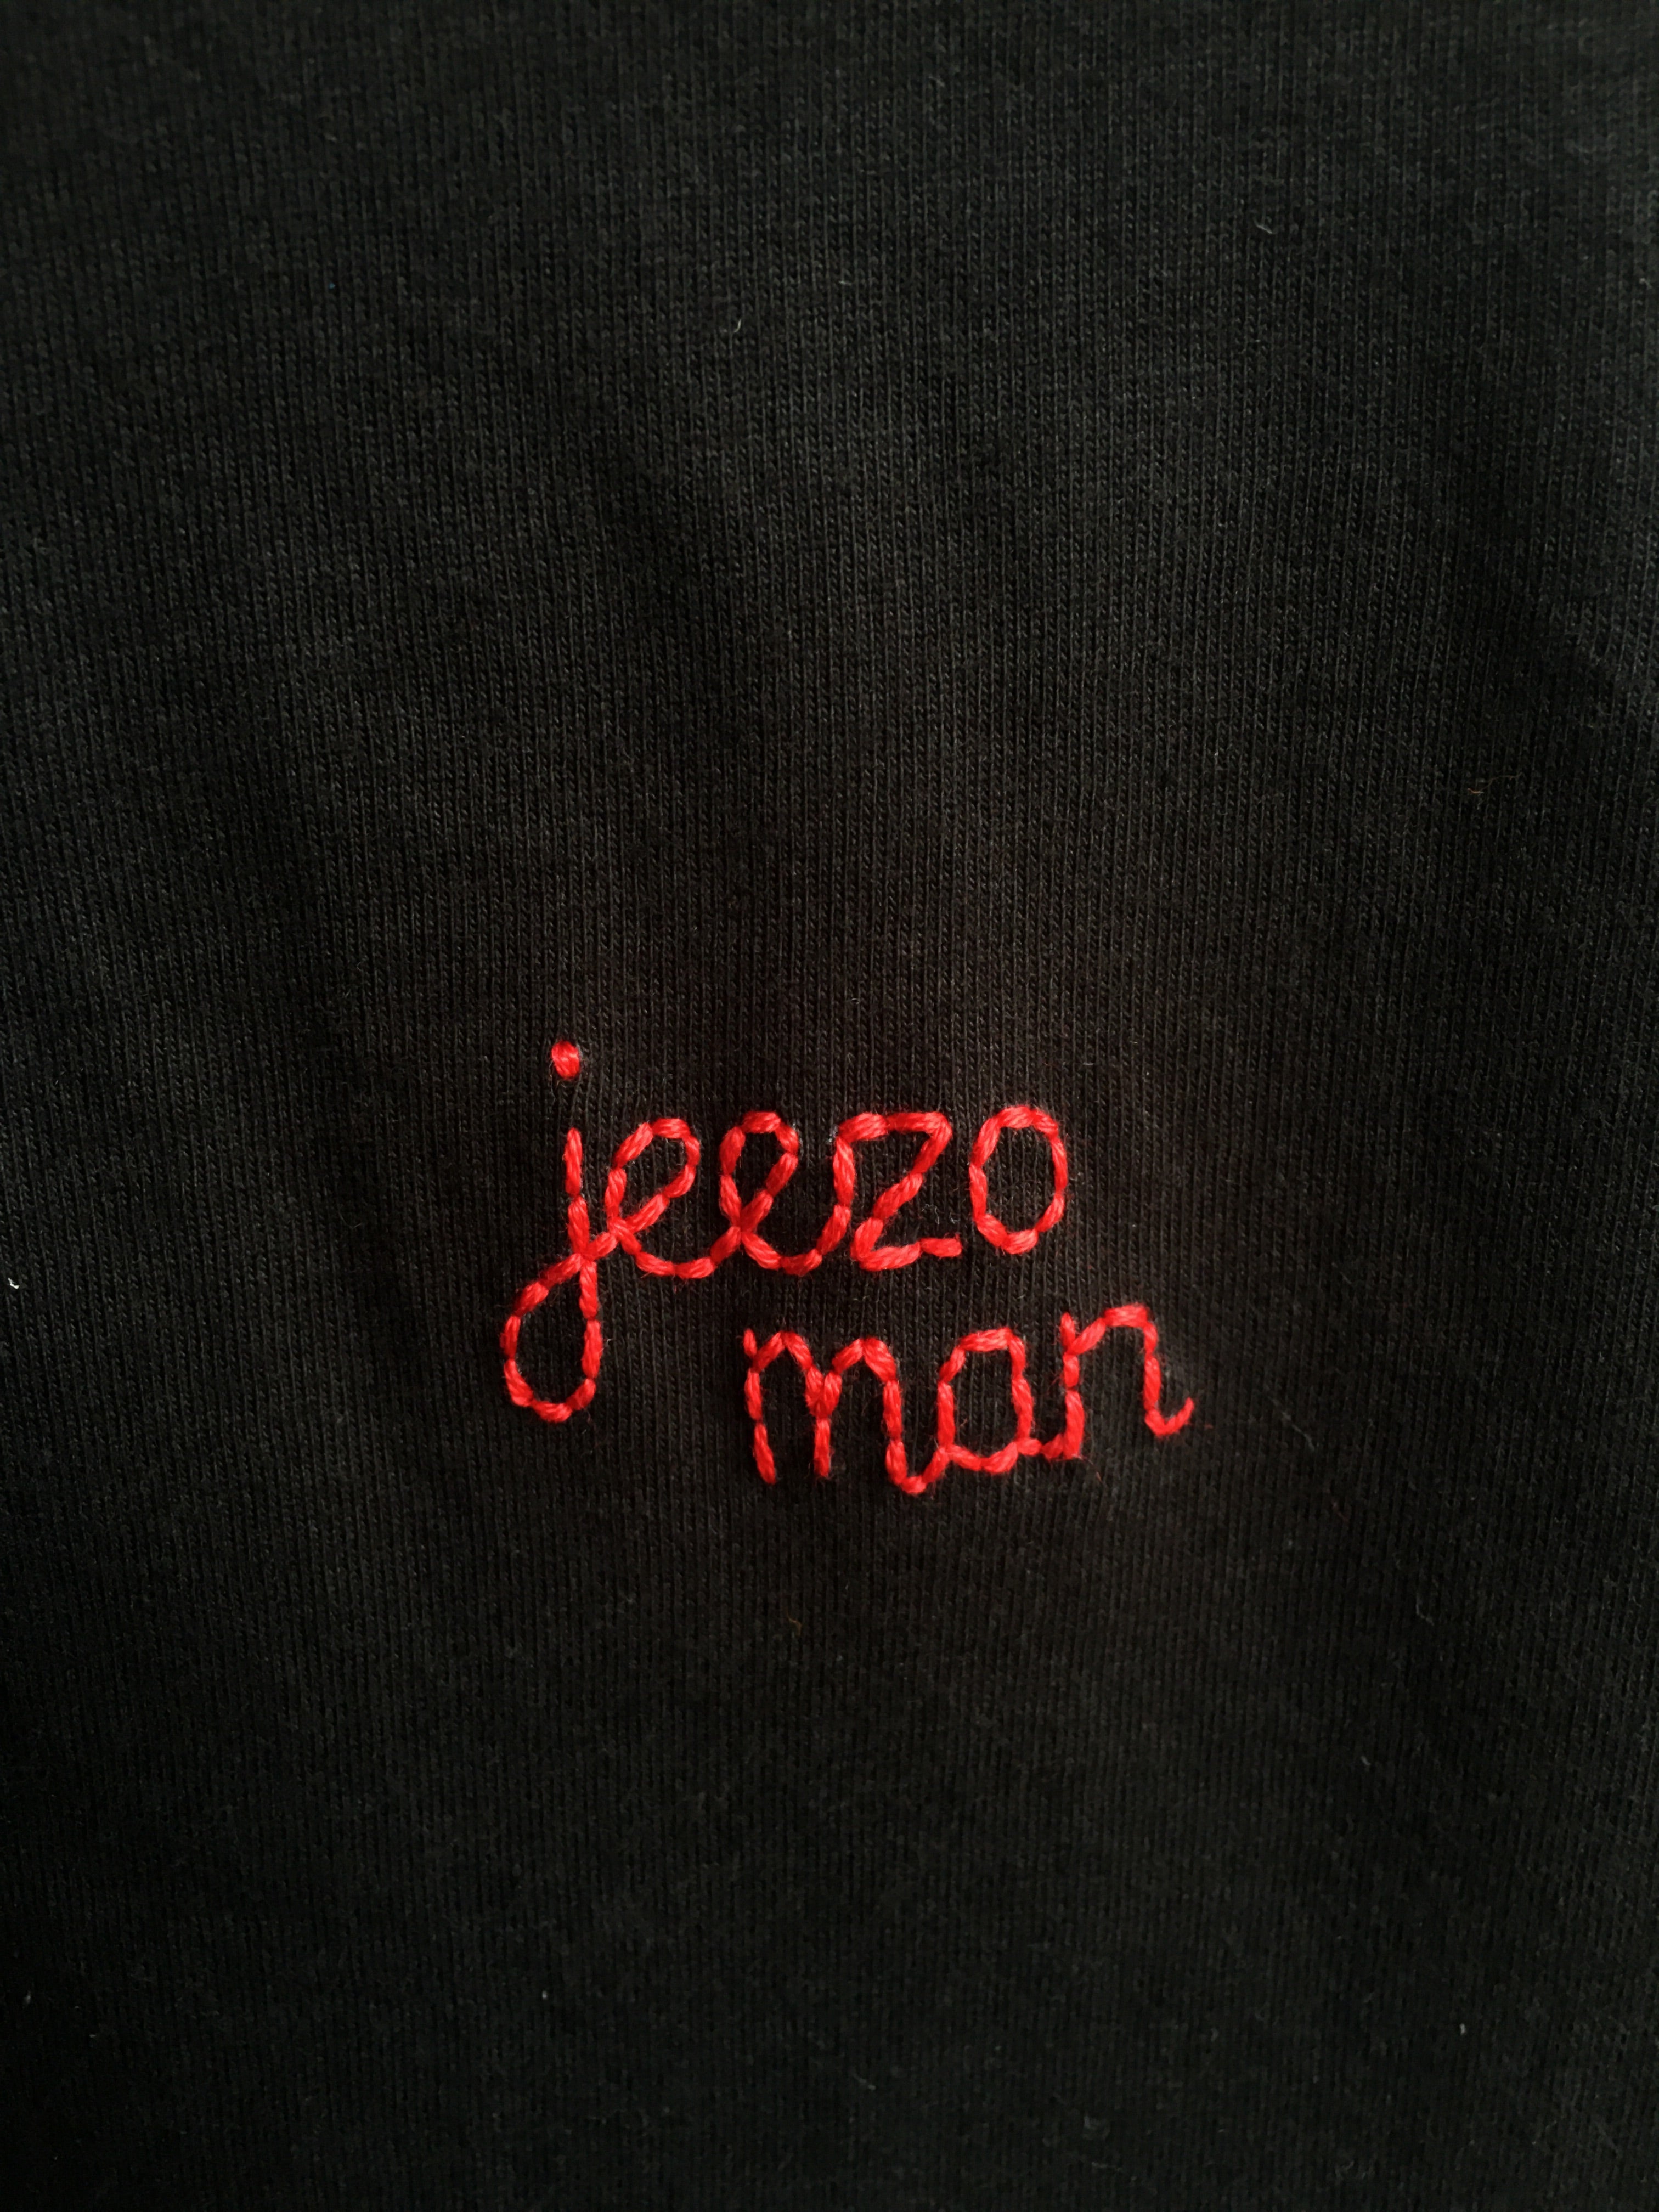 JEEZO MAN - T SHIRT